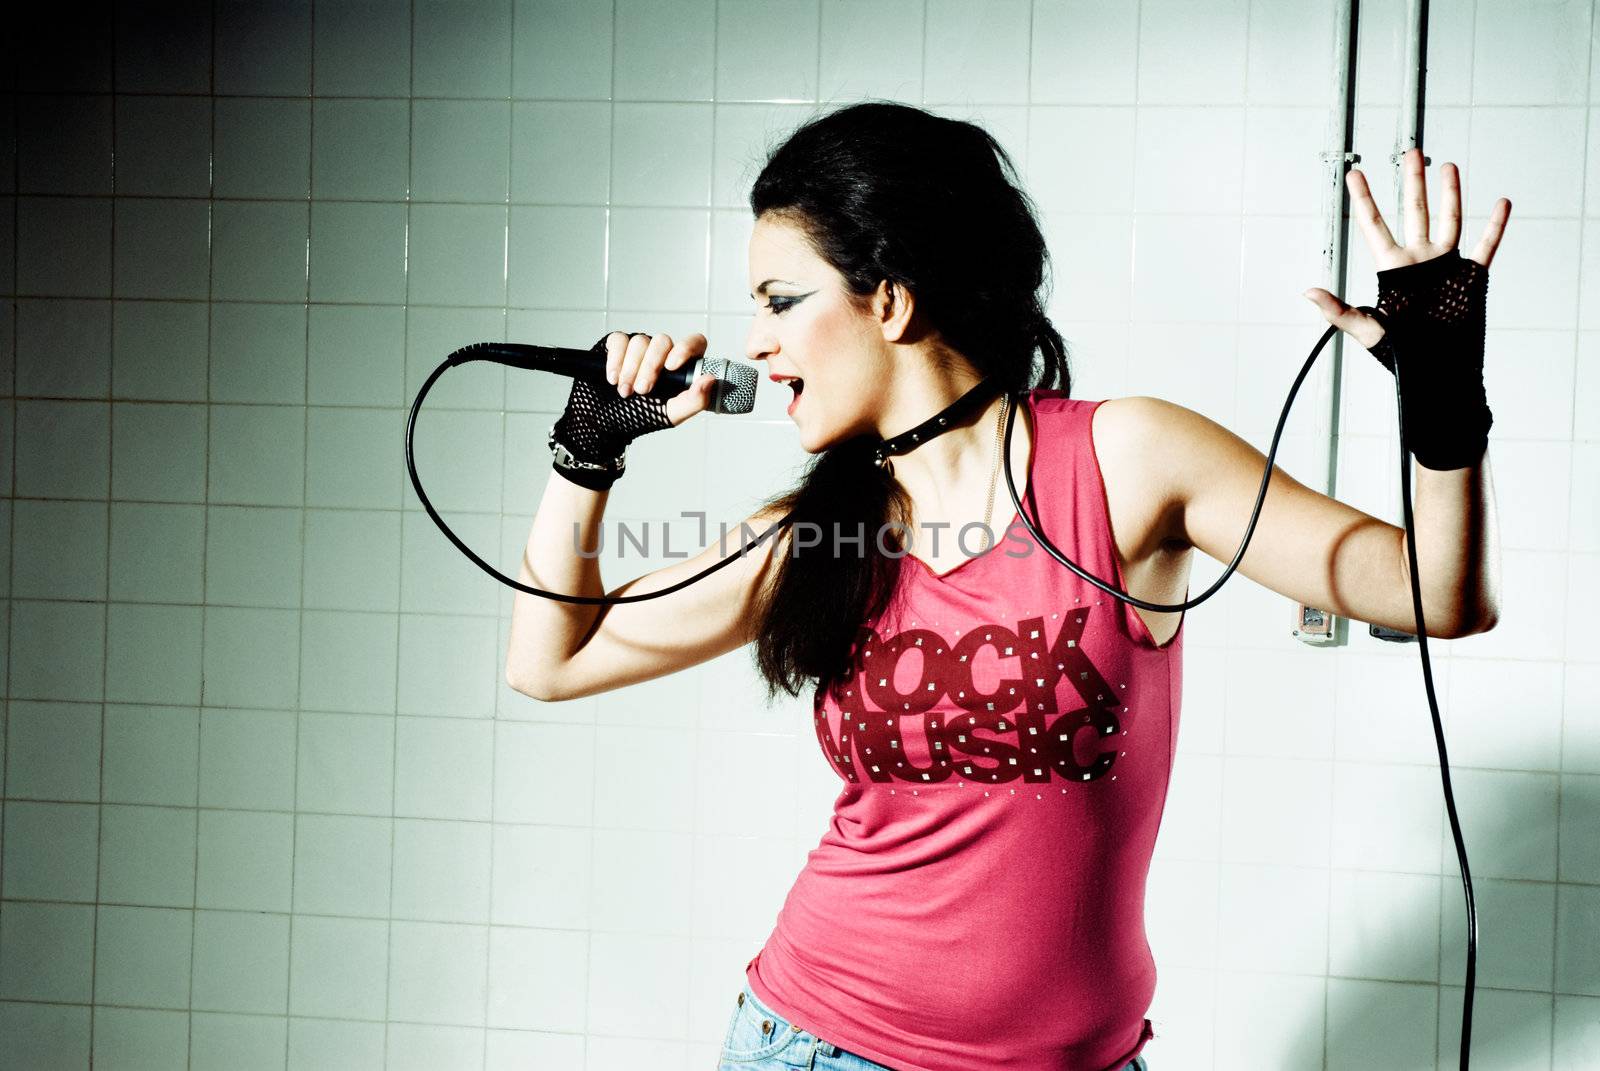 Punk Girl singing on an "underground" background high contrast